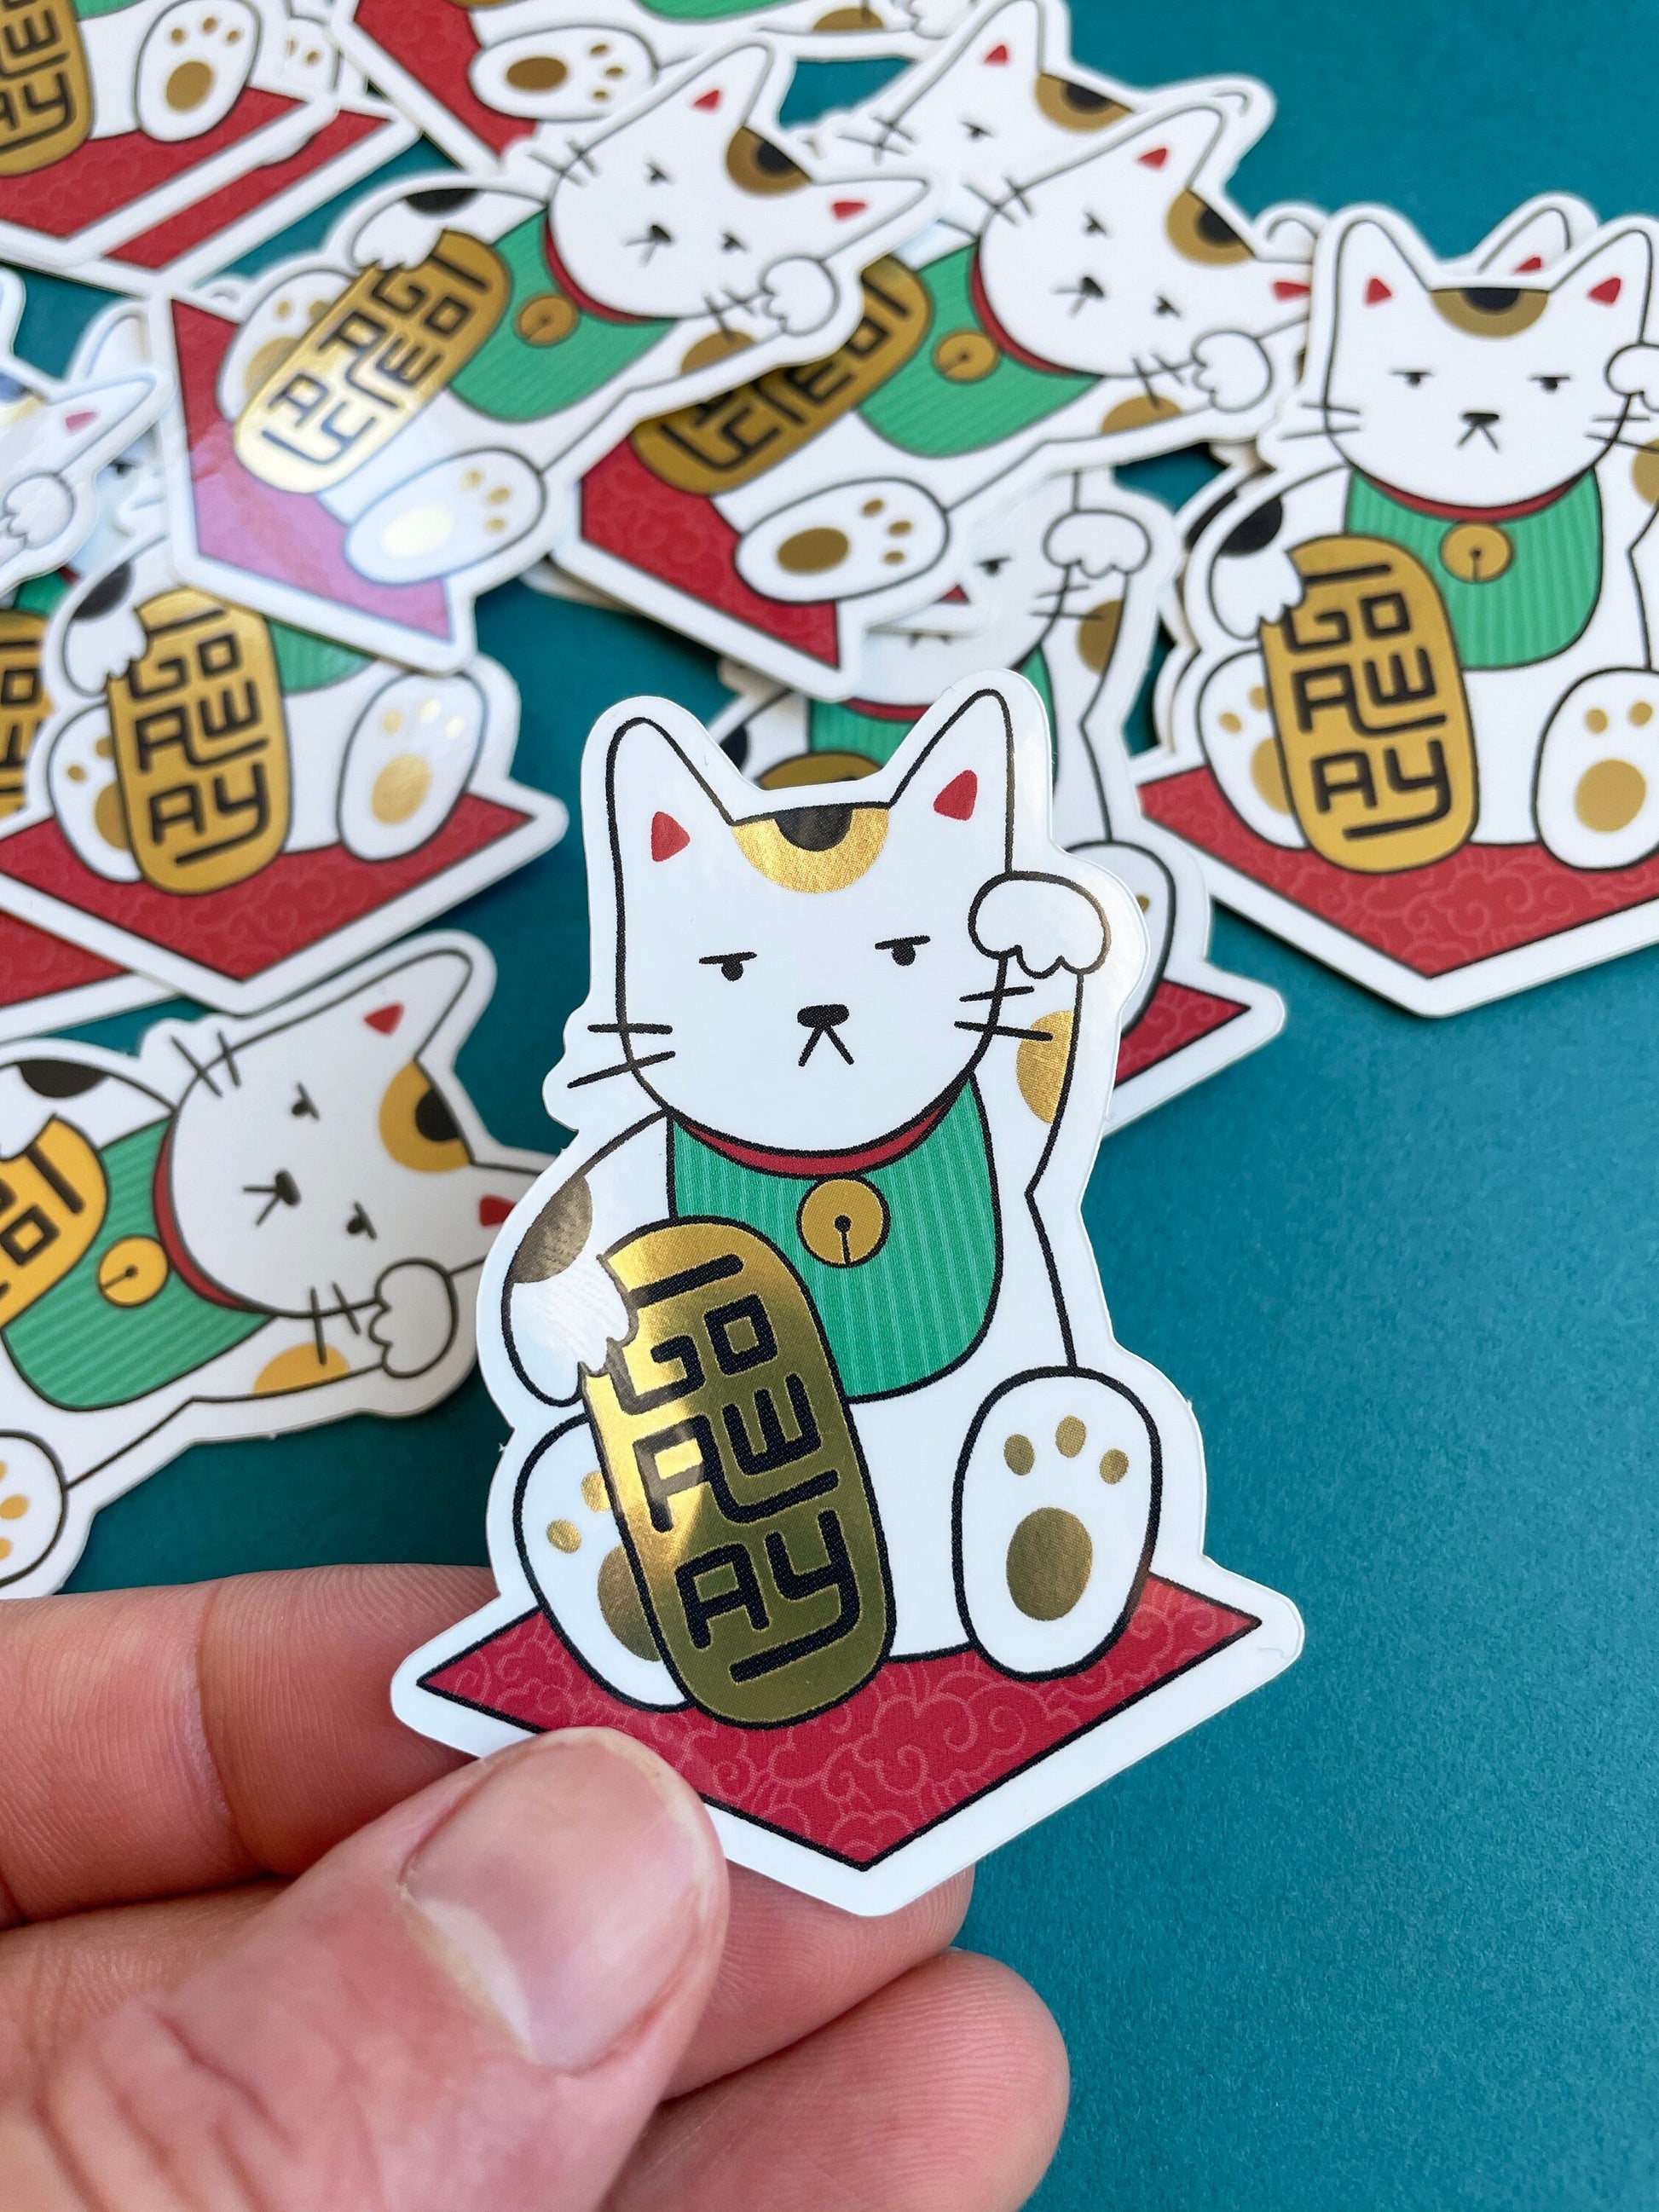 A hand holding a JaneLi.Co sticker that shows a Maneki Neko cat holding a metallic gold bar that says "Go Away" over a pile of Maneki Neko stickers on a teal background. 